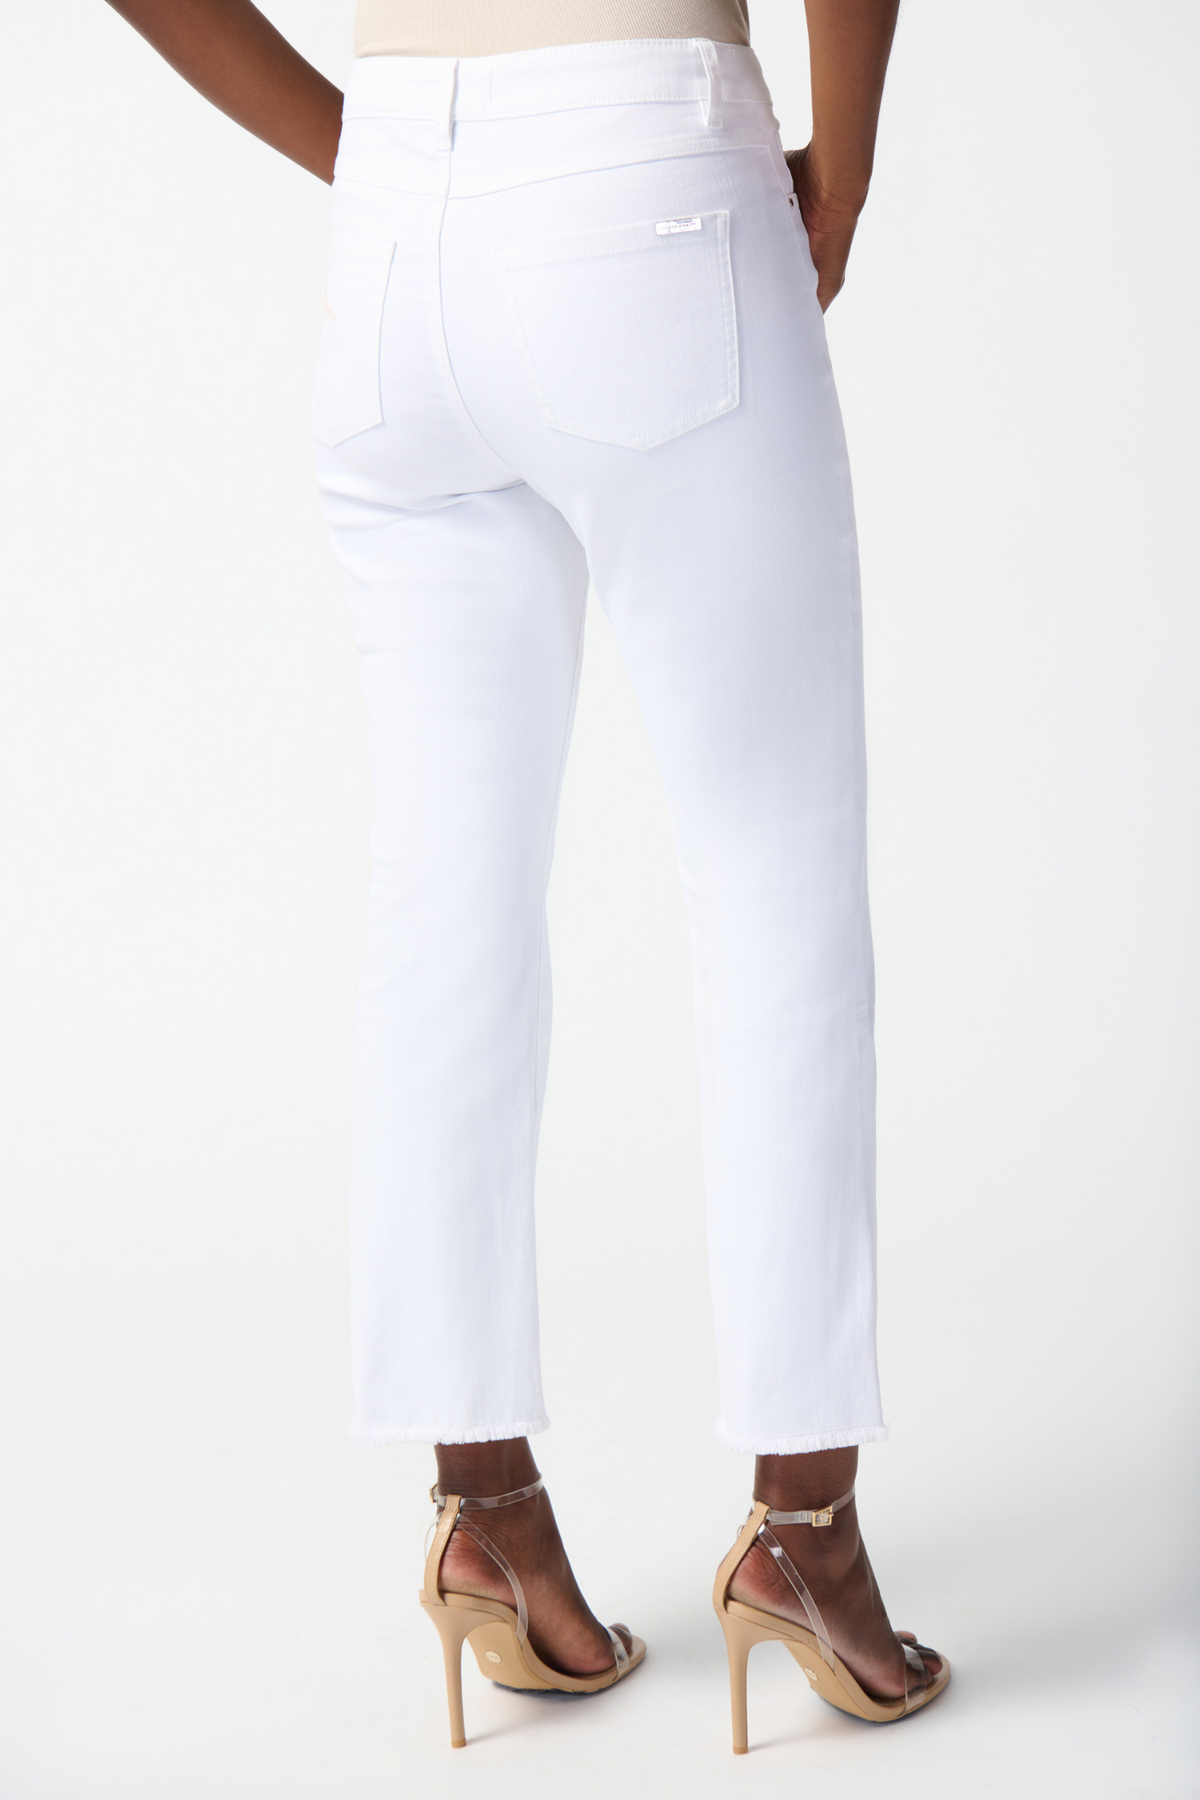 Joseph Ribkoff Denim Frayed Hem Straight Jeans - Style 242925, back